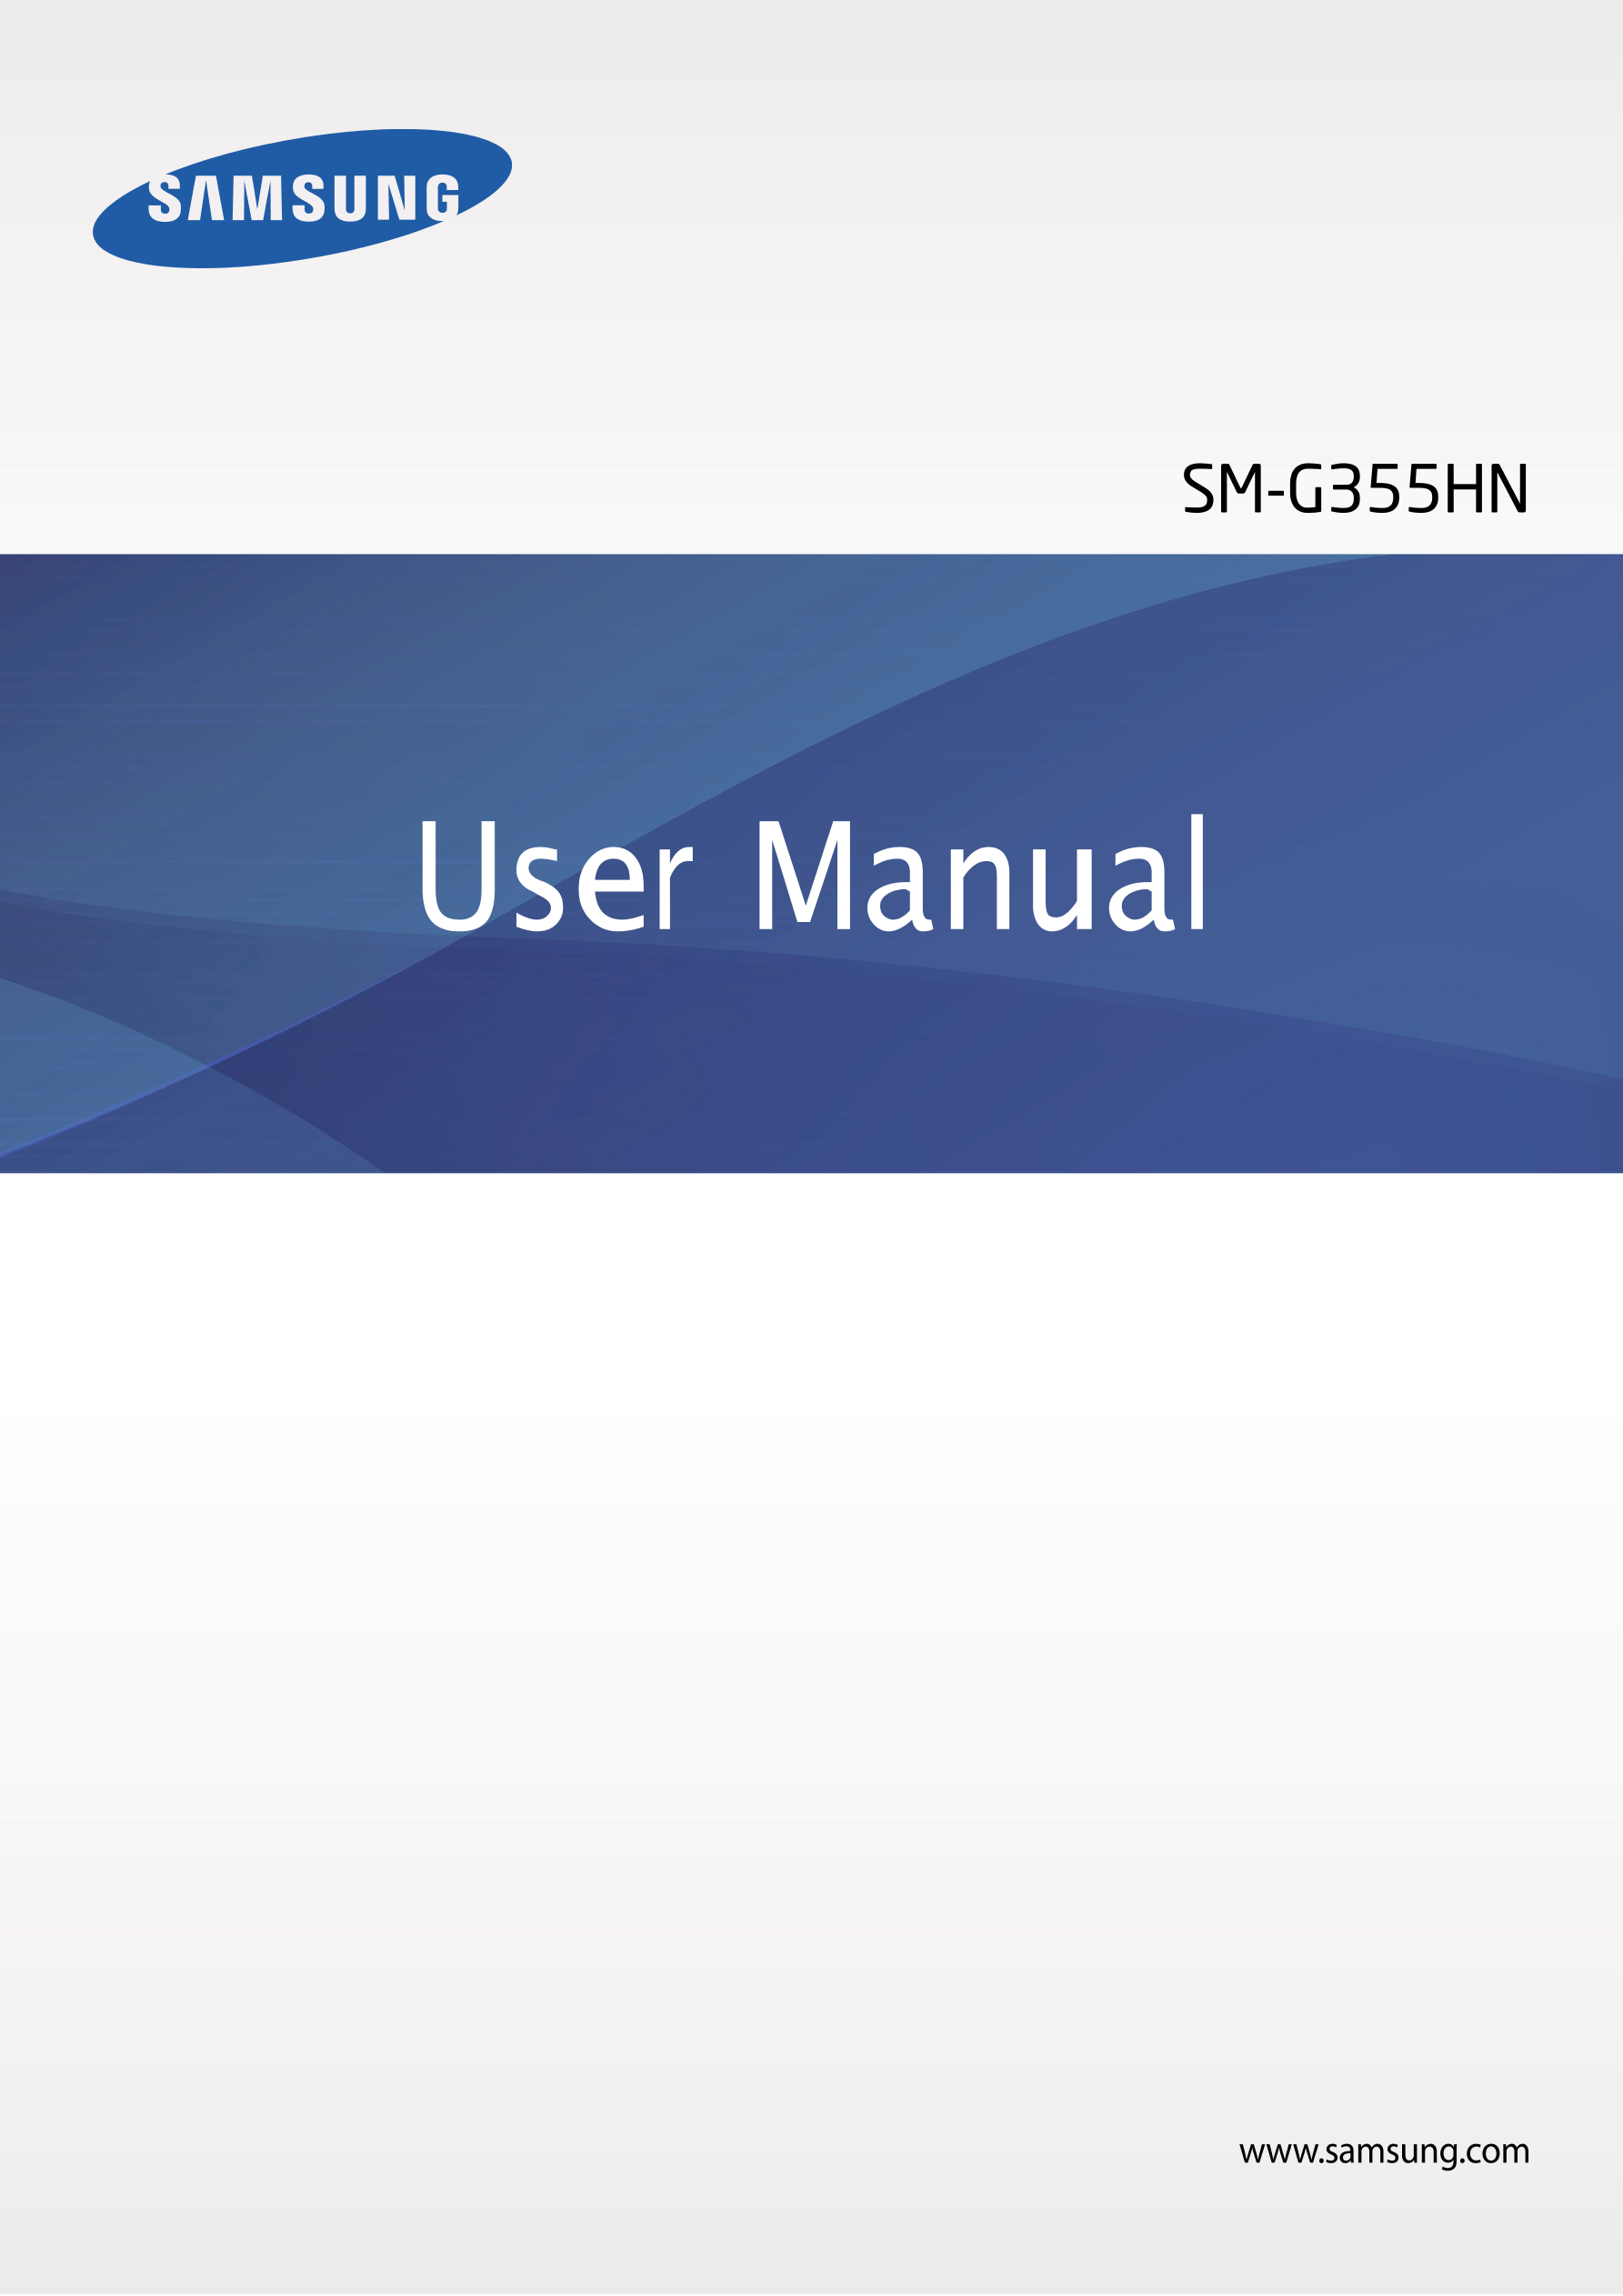 SM-G355HN
User Manual
www.samsung.com